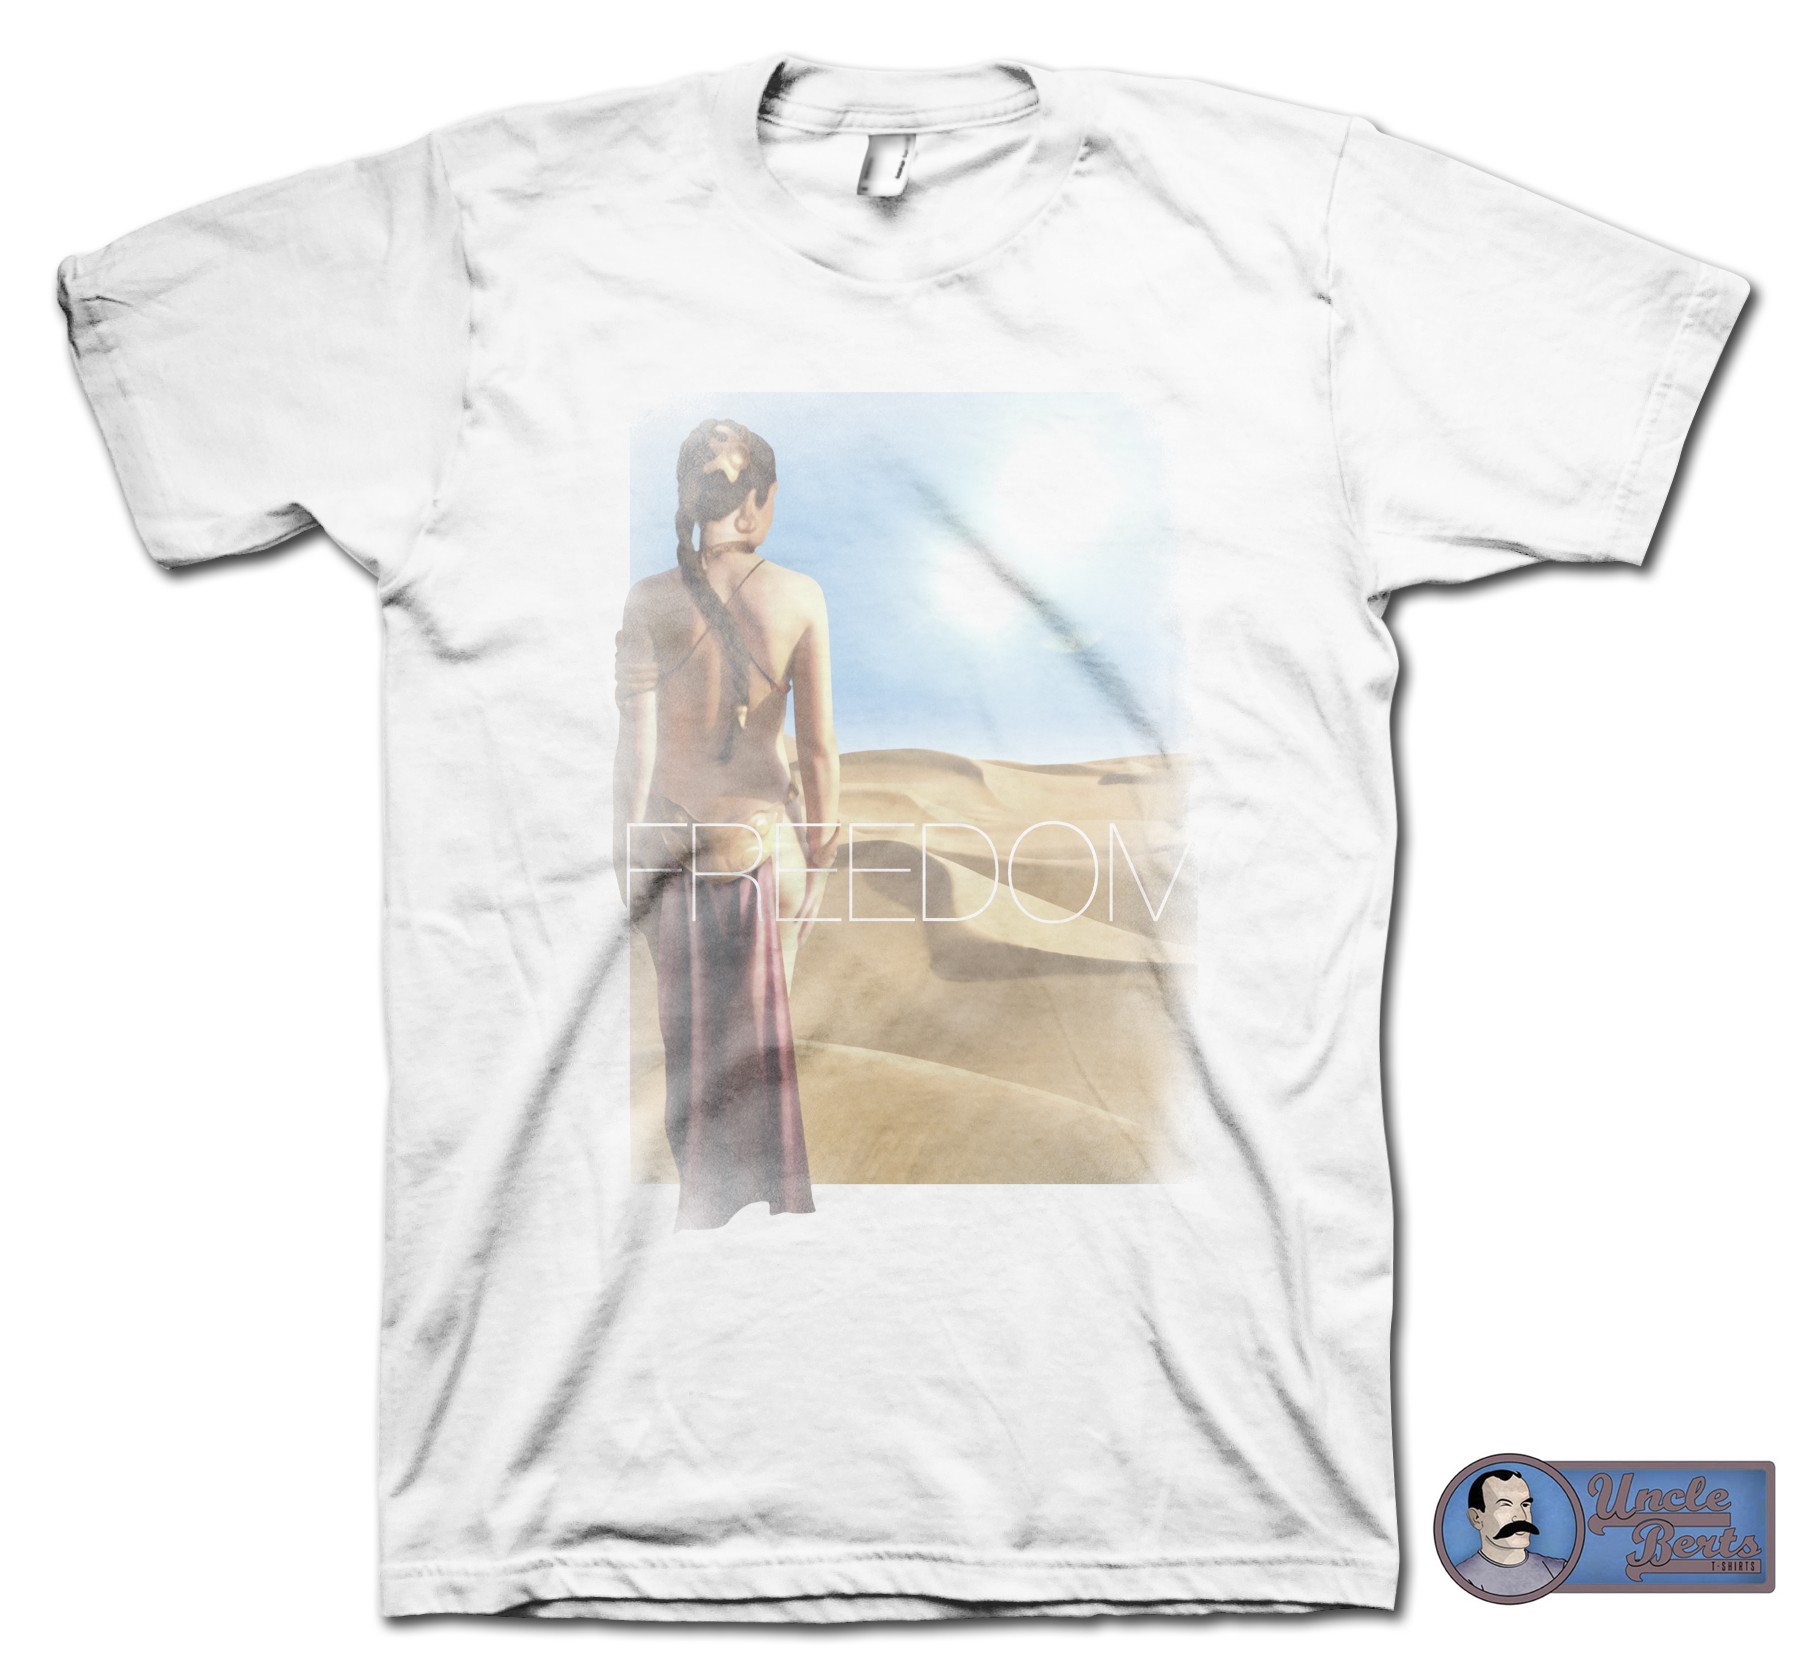 Star Wars Return of the Jedi (1983) Inspired Freedom T-Shirt